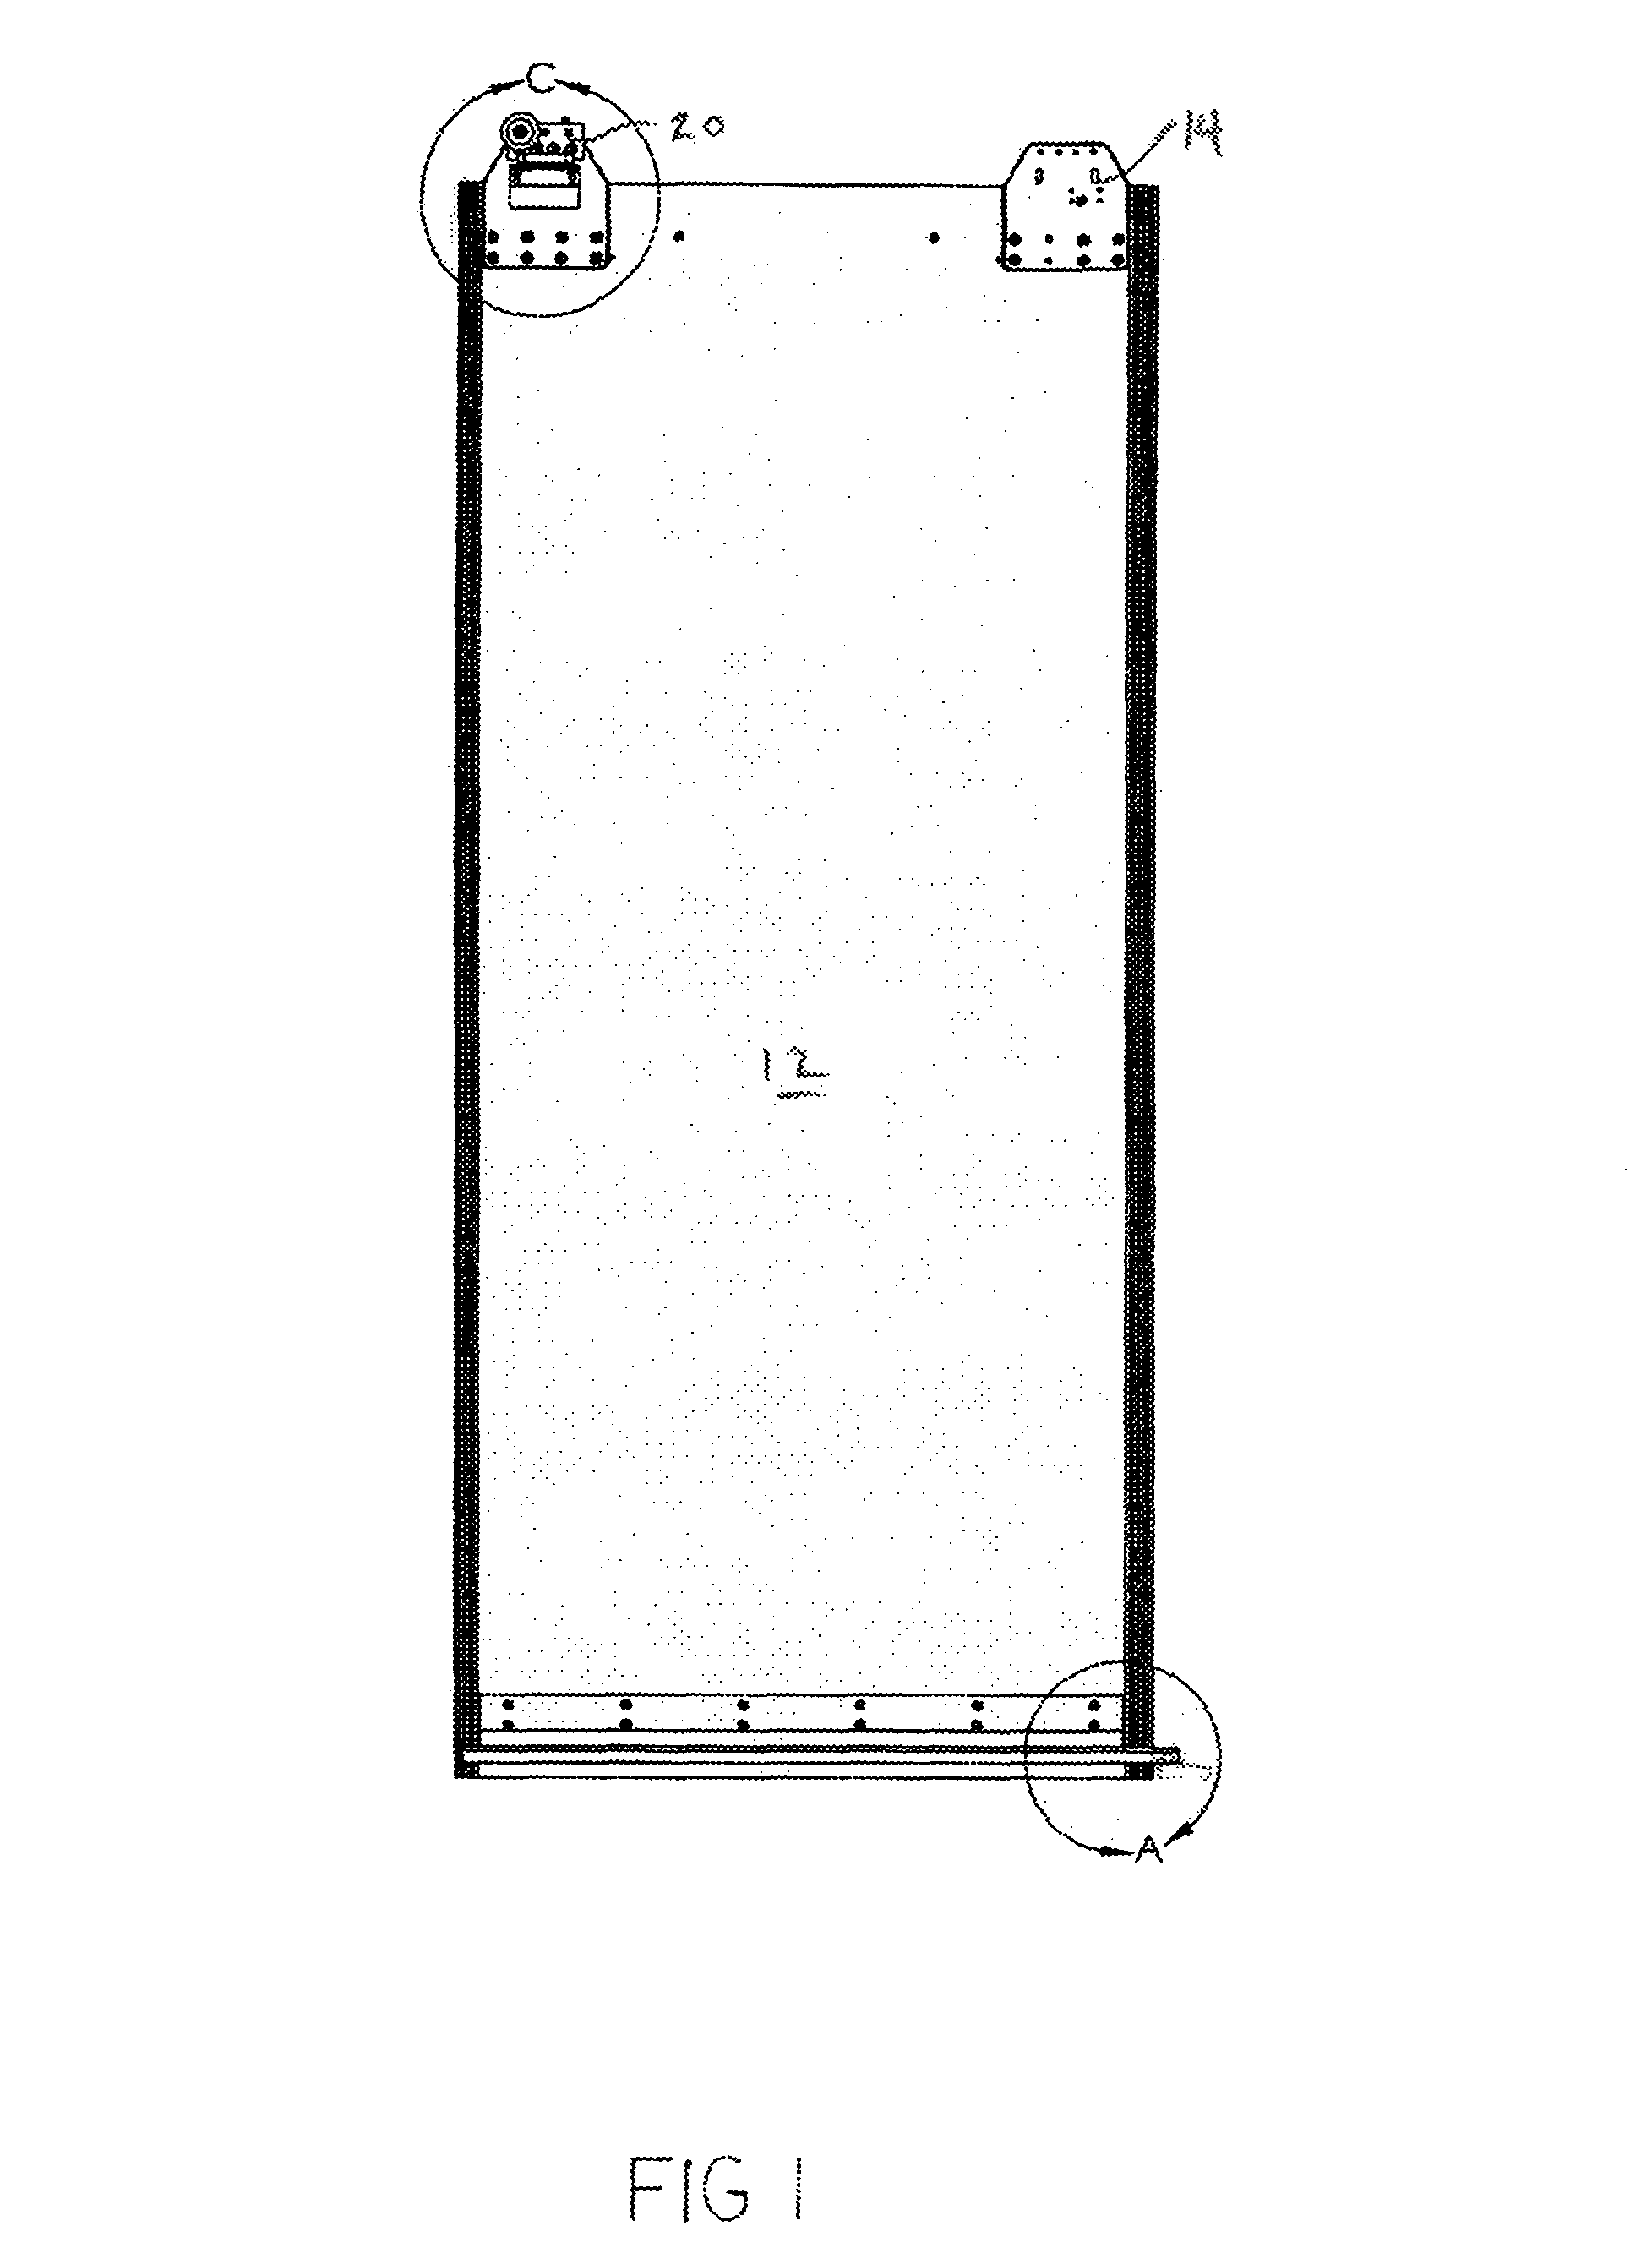 Multiseal door, method for sealing an enclosure